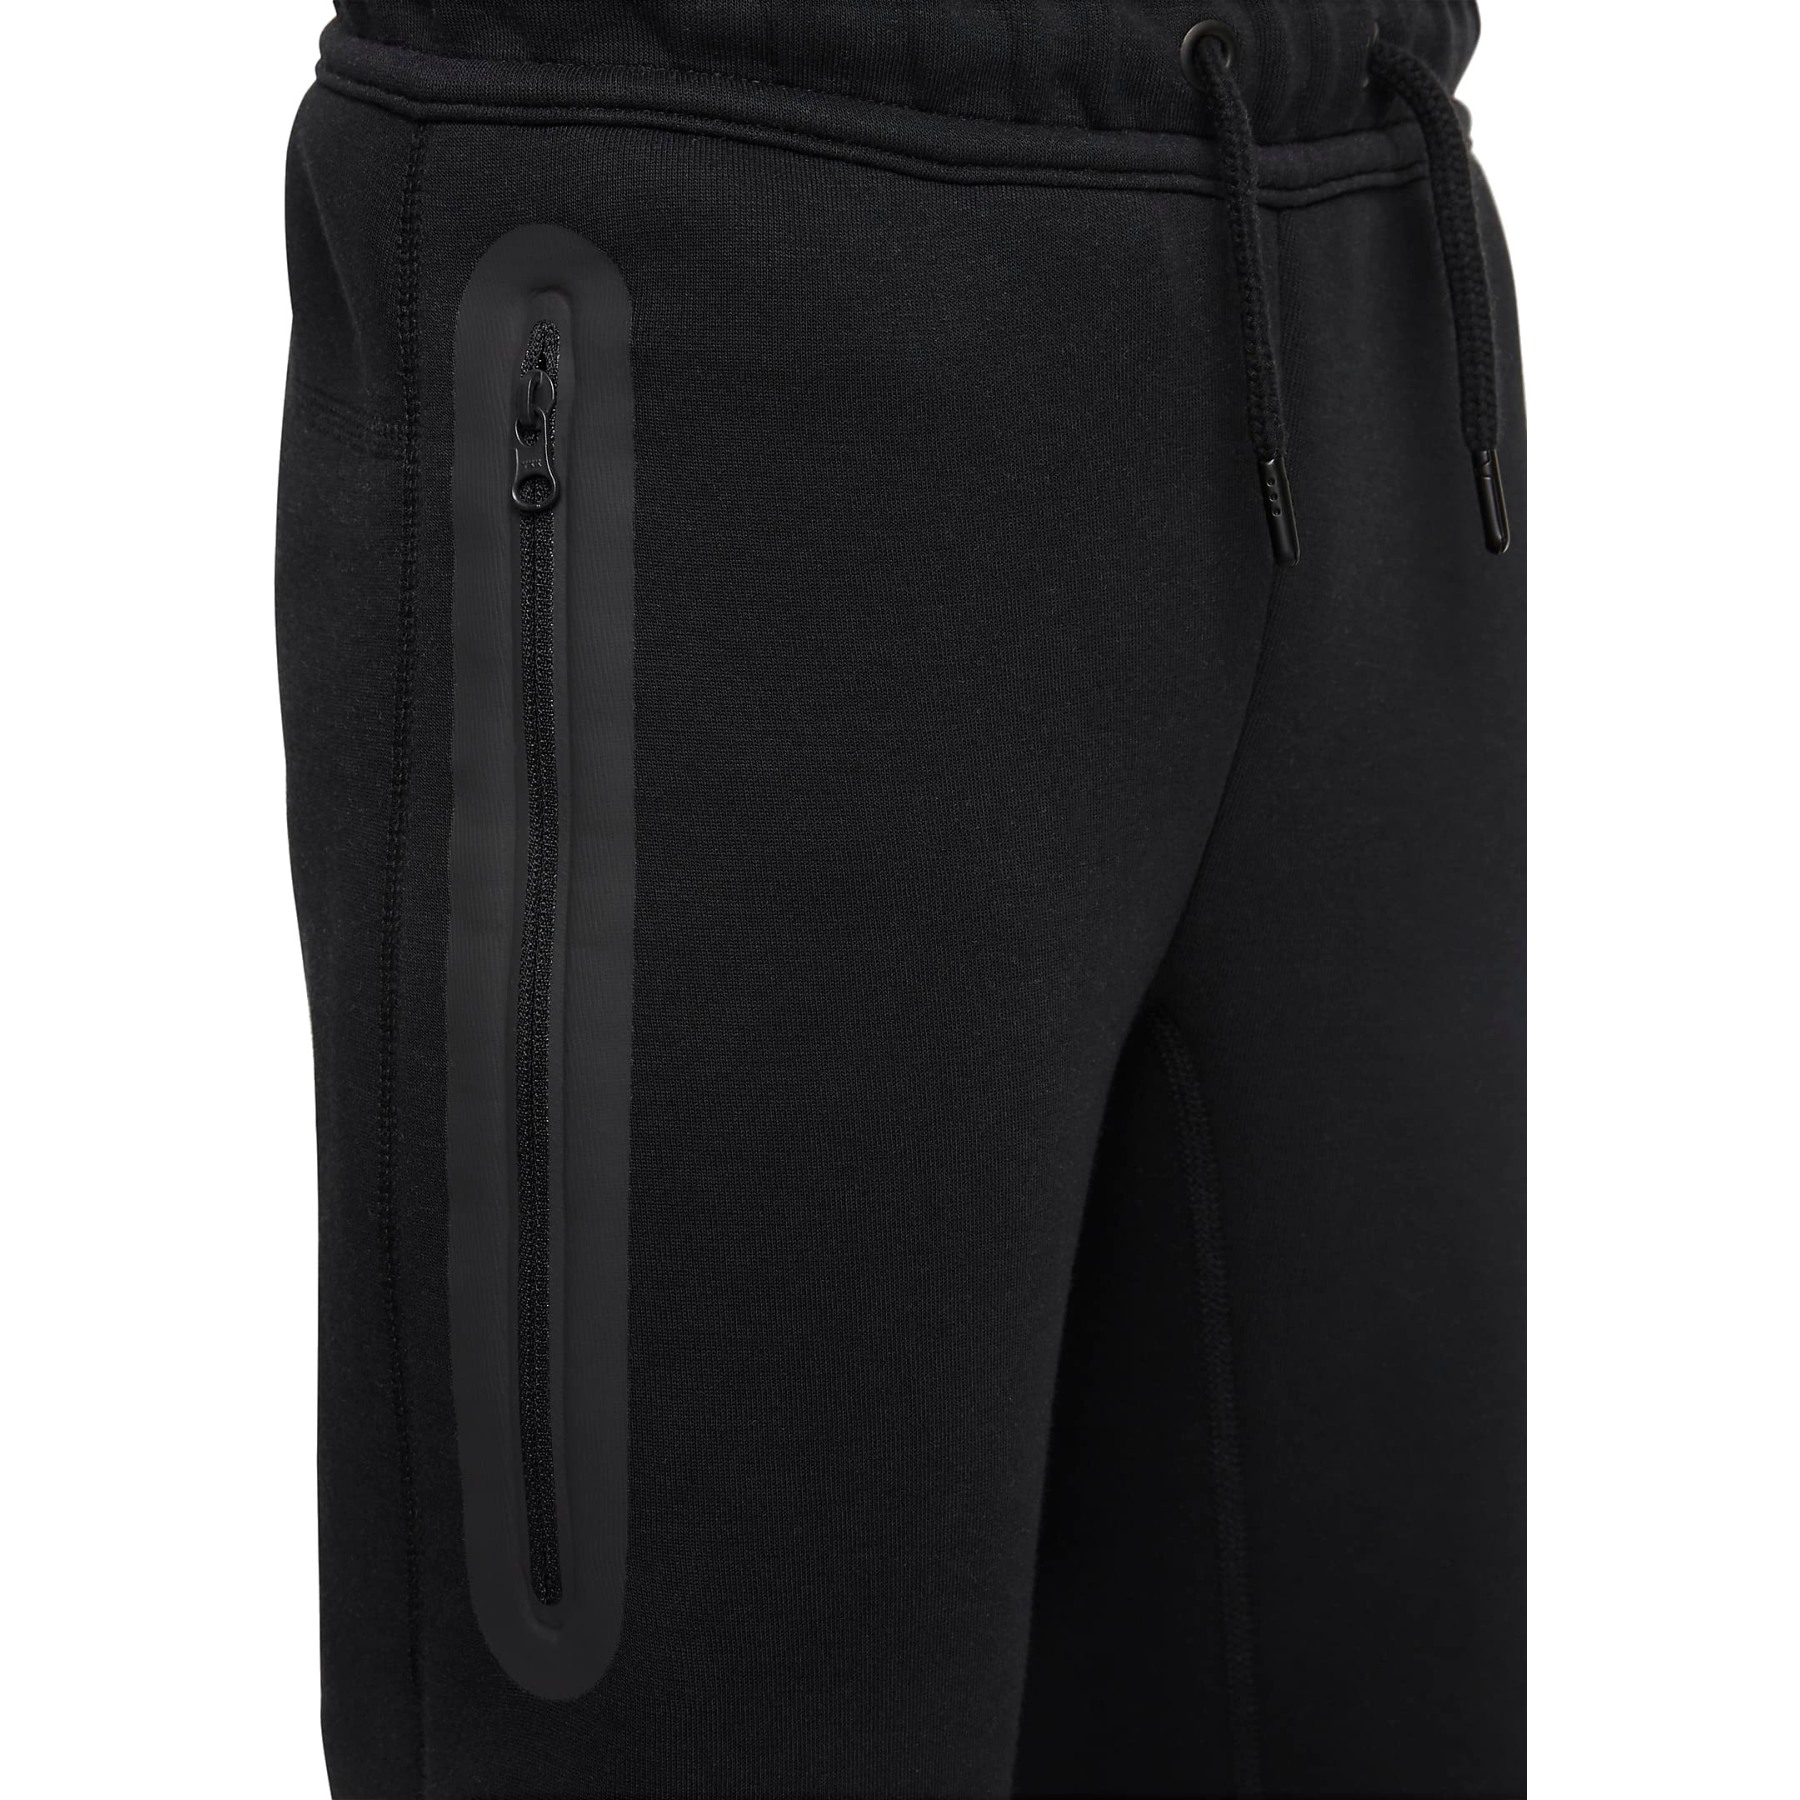 schwarz/schwarz/schwarz Sportswear Nike - Tech für FD3287-010 Fleece Hose ältere Kinder